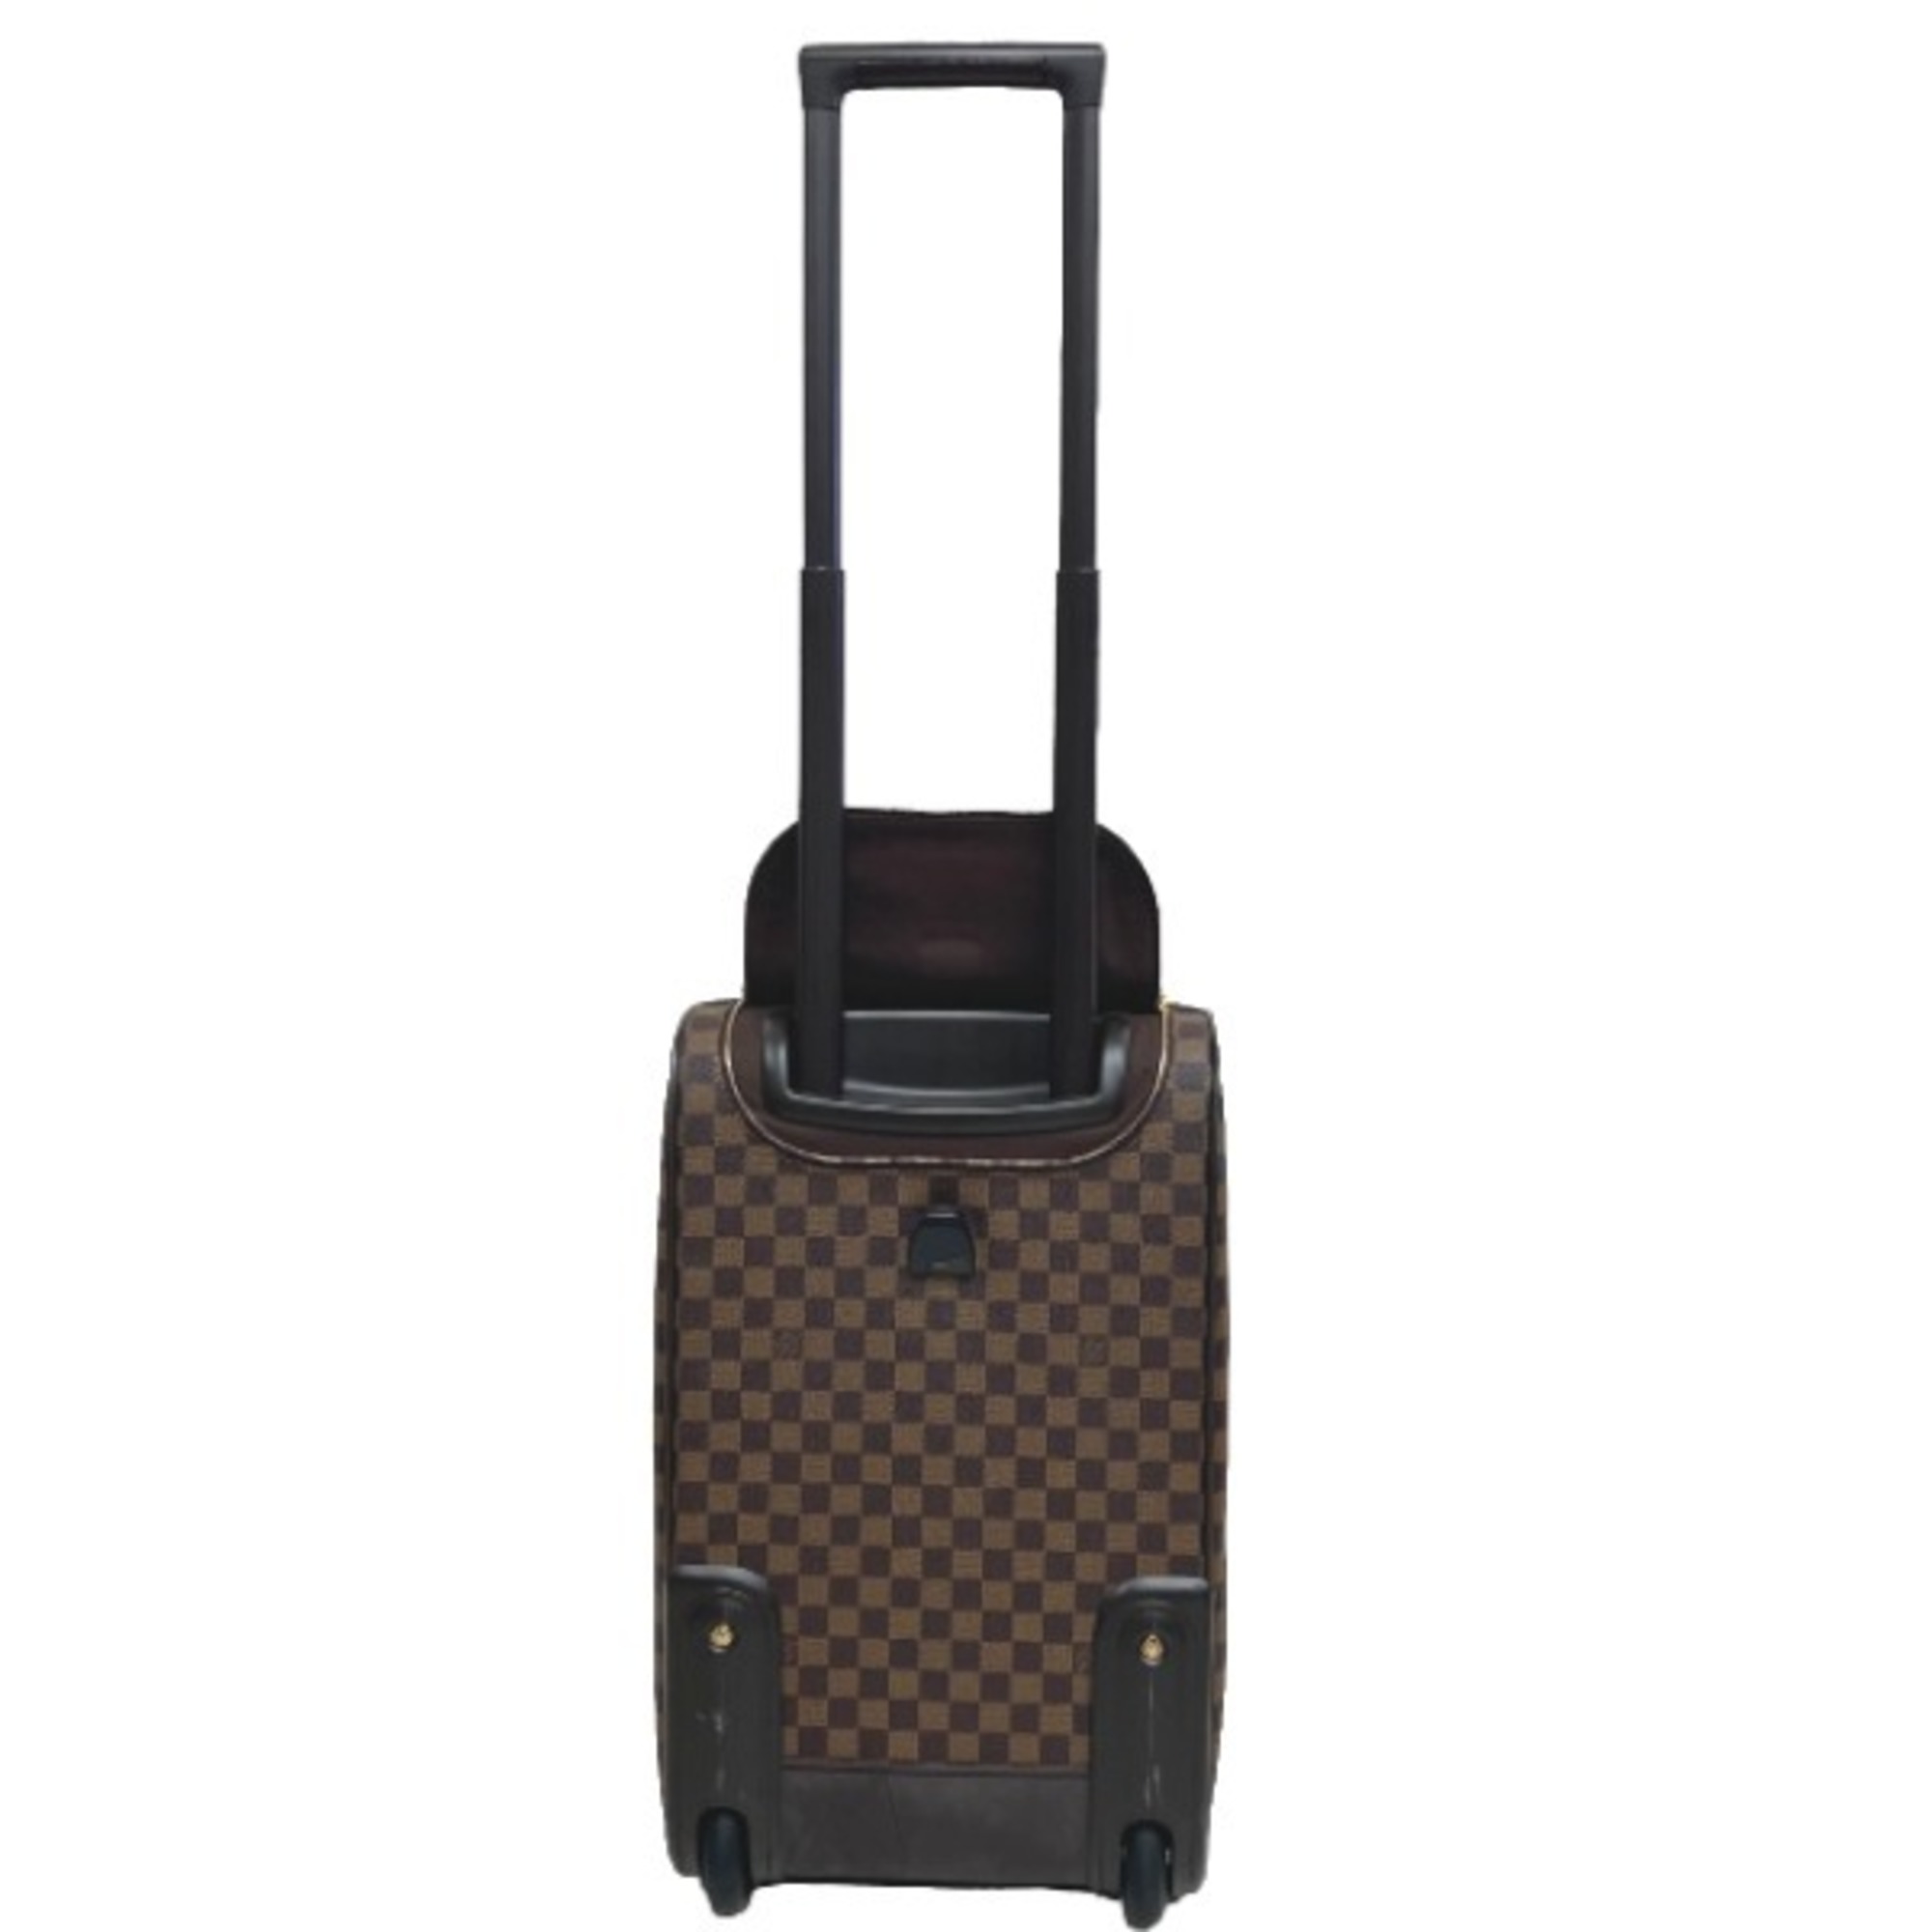 LOUIS VUITTON Travel bag with wheels Damier Eor 50 N23205 Louis Vuitton Brown Carry LV